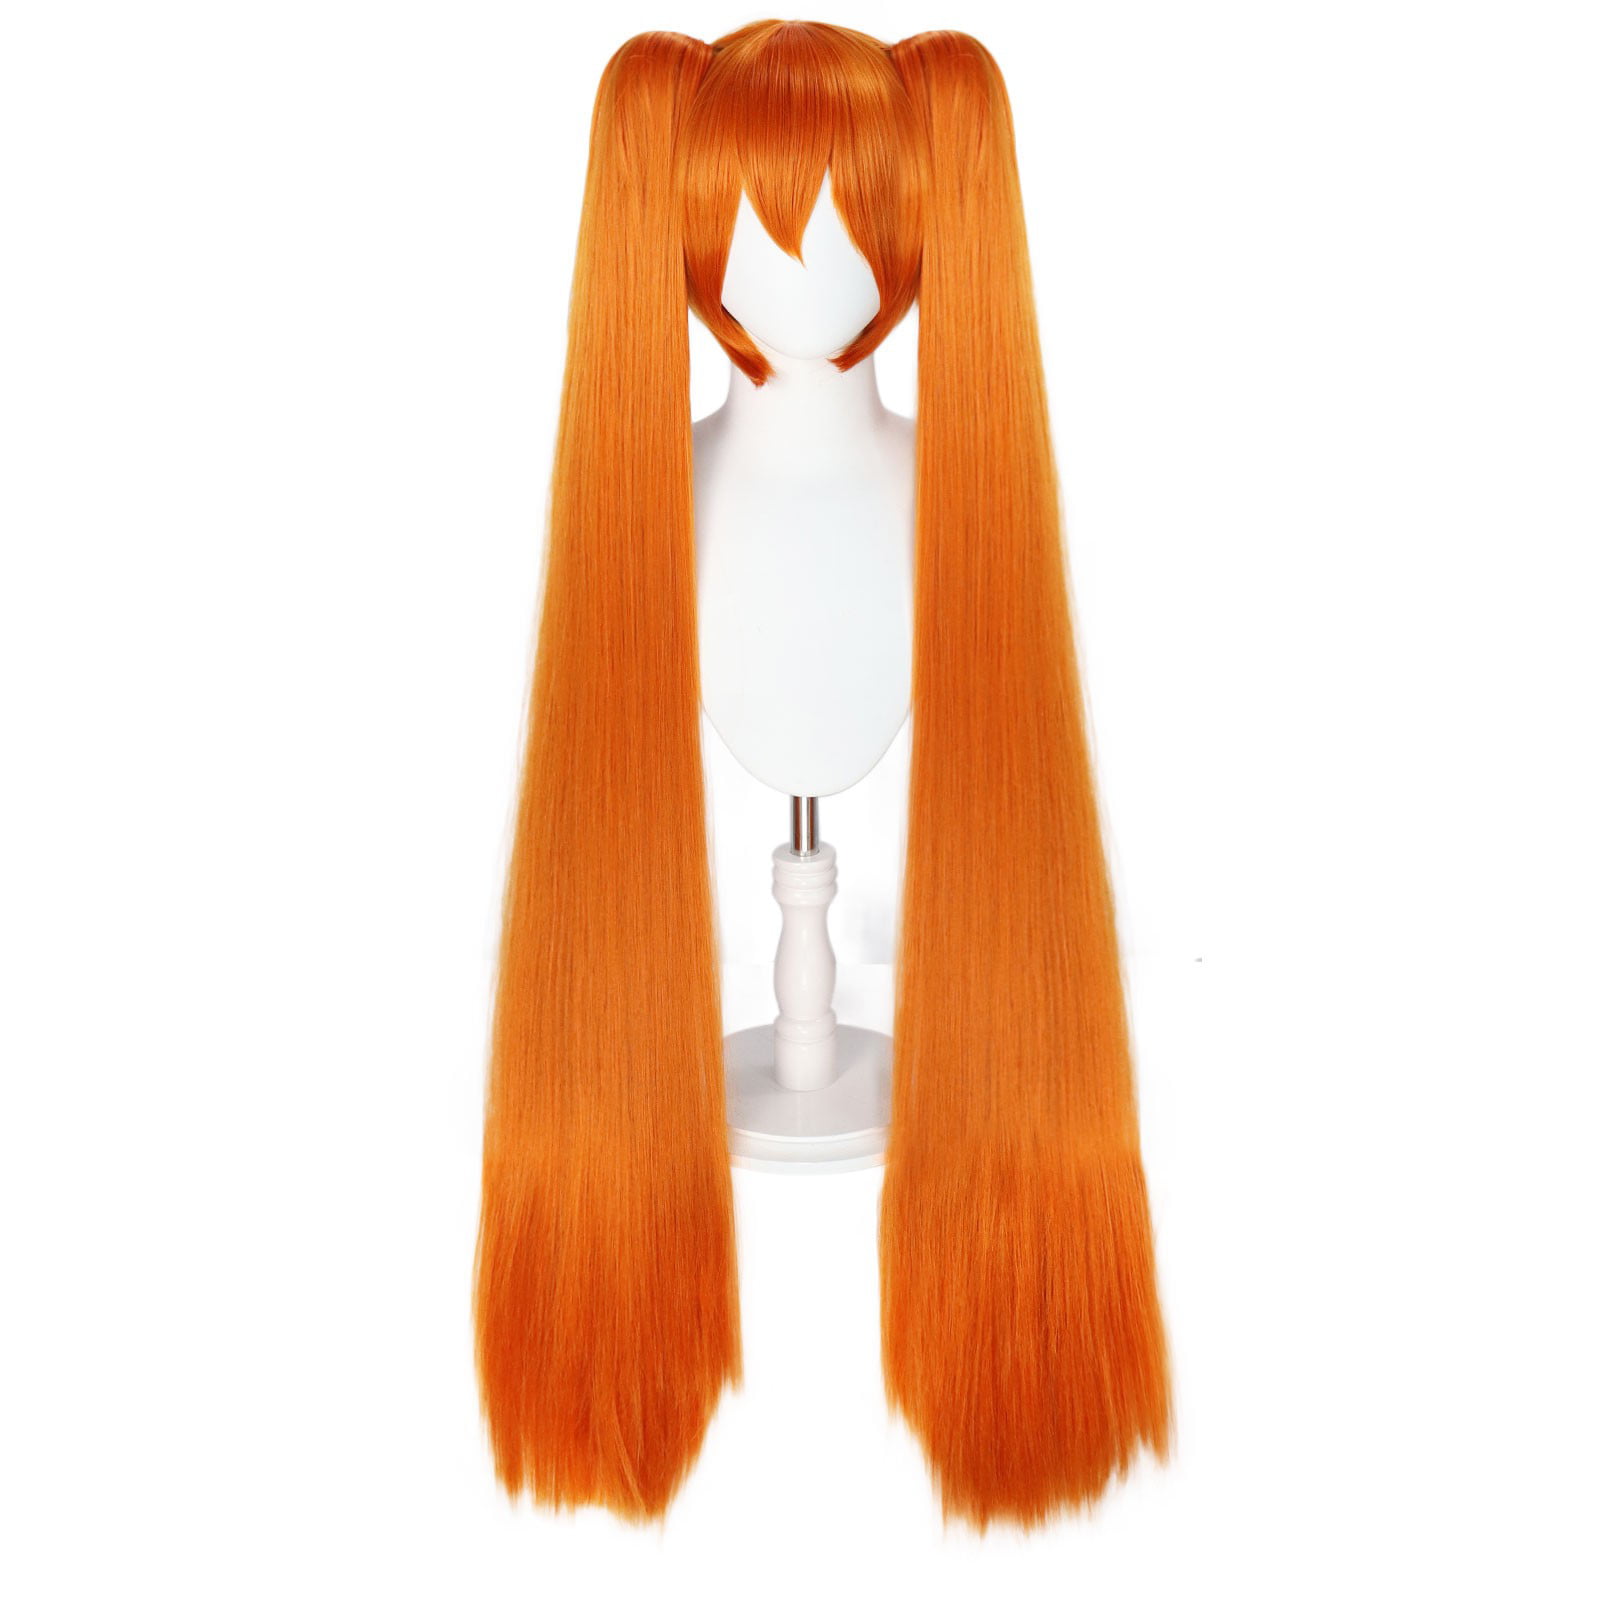 Game Yandere Simulator Osana Najimi 110cm Long Orange Pink Straight Cosplay  Wig Heat Resistant Hair Cosplay Wigs + wig cap